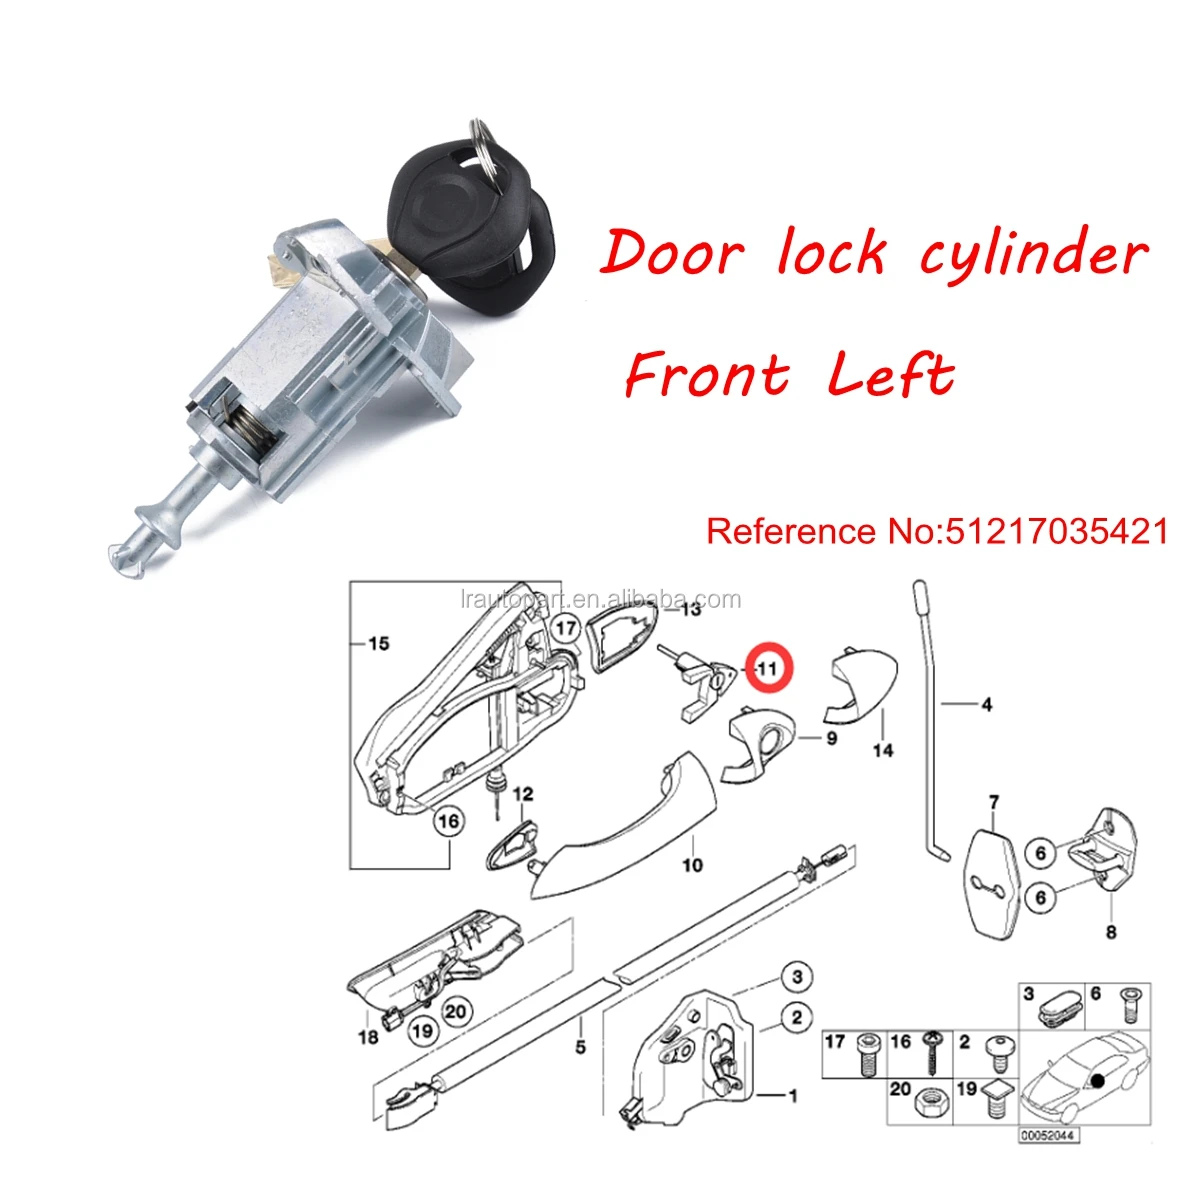 KESOTO Perfect Replacement Car Door Lock Cylinder Barrel Repair Kit for BMW X3 X5 51217035421